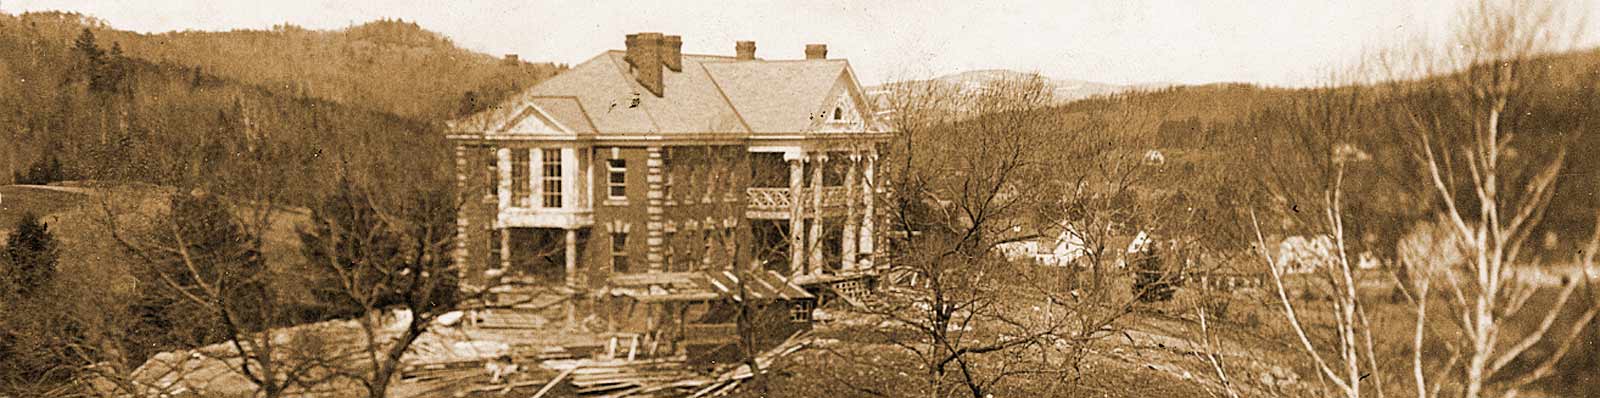 1907: Original Littleton Hospital under construction